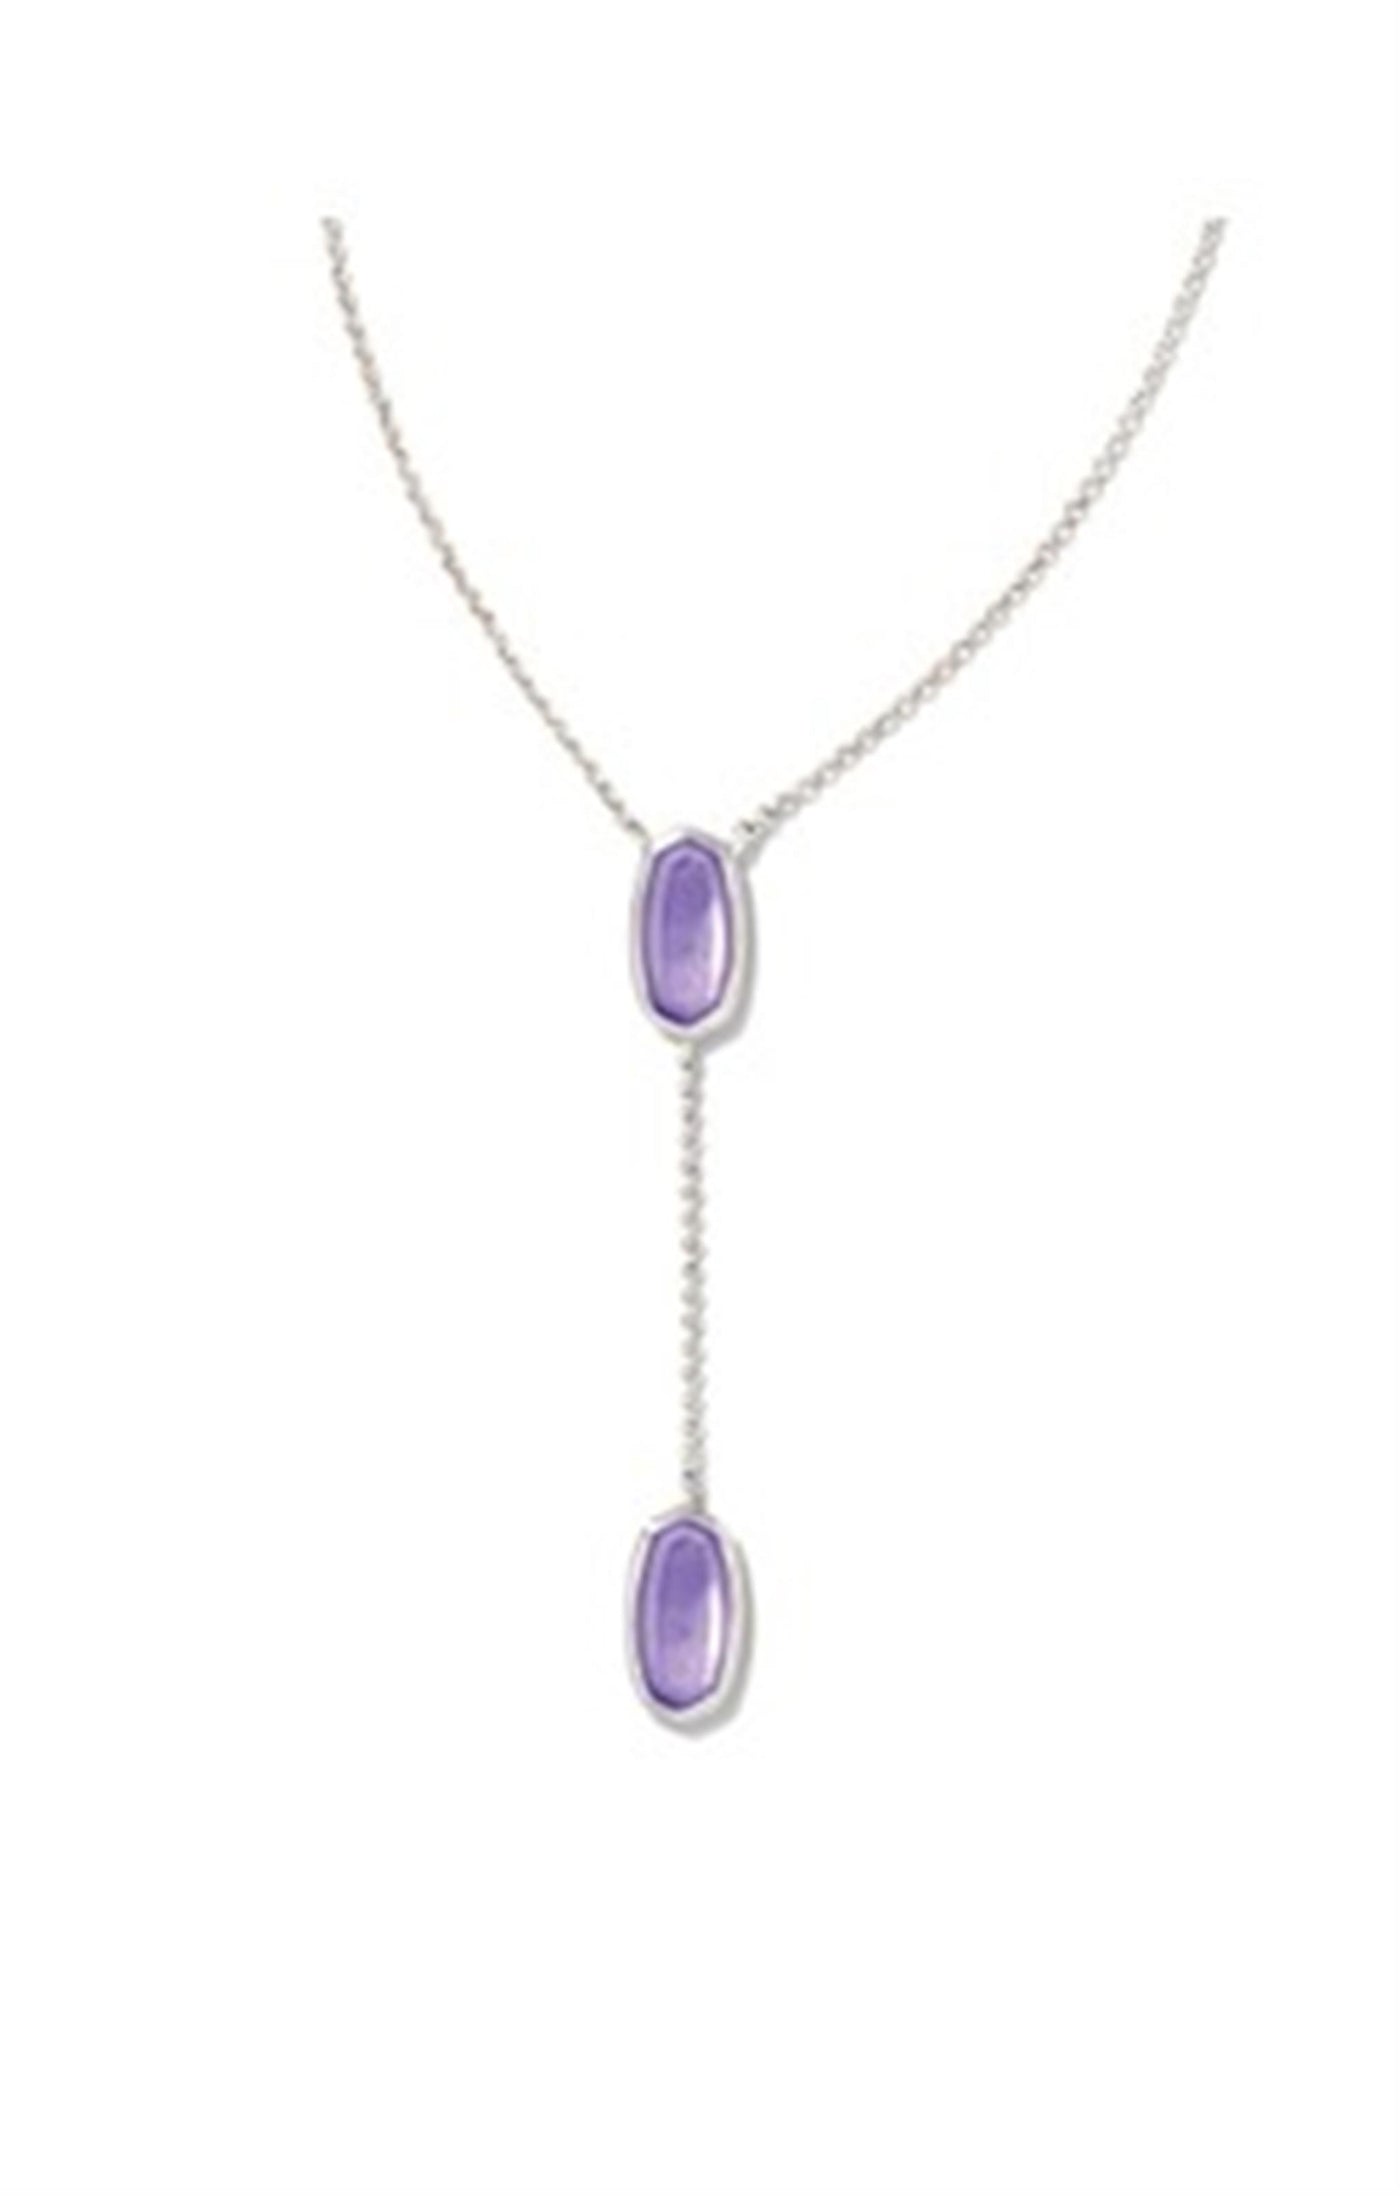 Silver Tone Necklace Featuring Lavendar Opalite by Kendra Scott